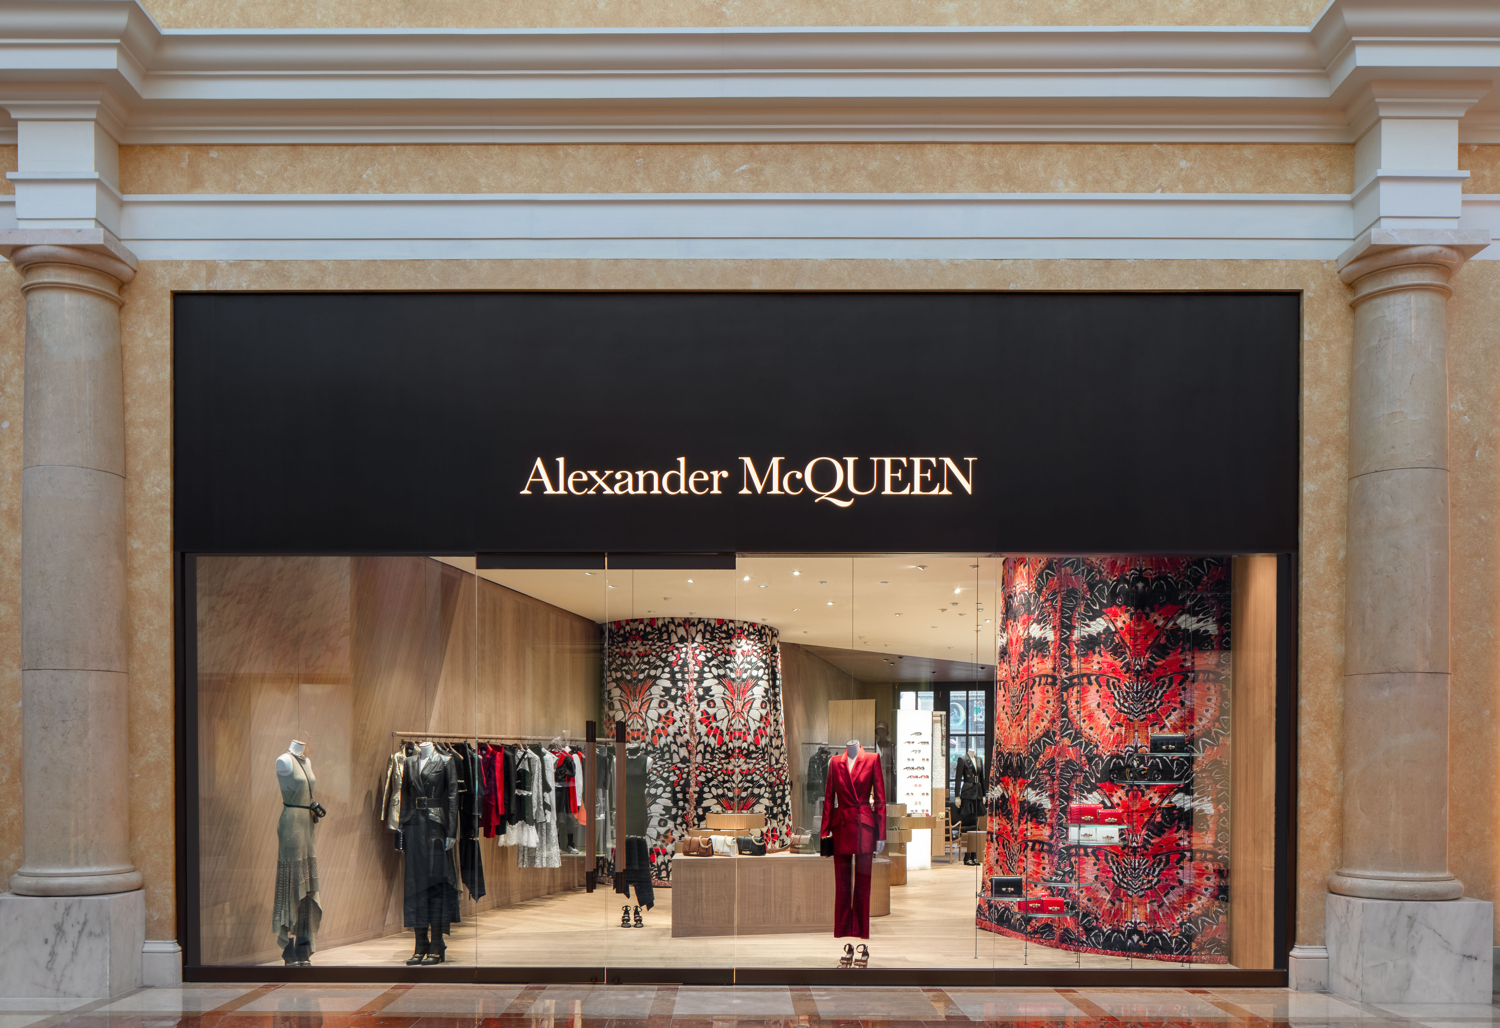 Alexander McQueen 3131 Las Vegas Blvd. South Las Vegas, NV 89109 on  4URSPACE retail profile